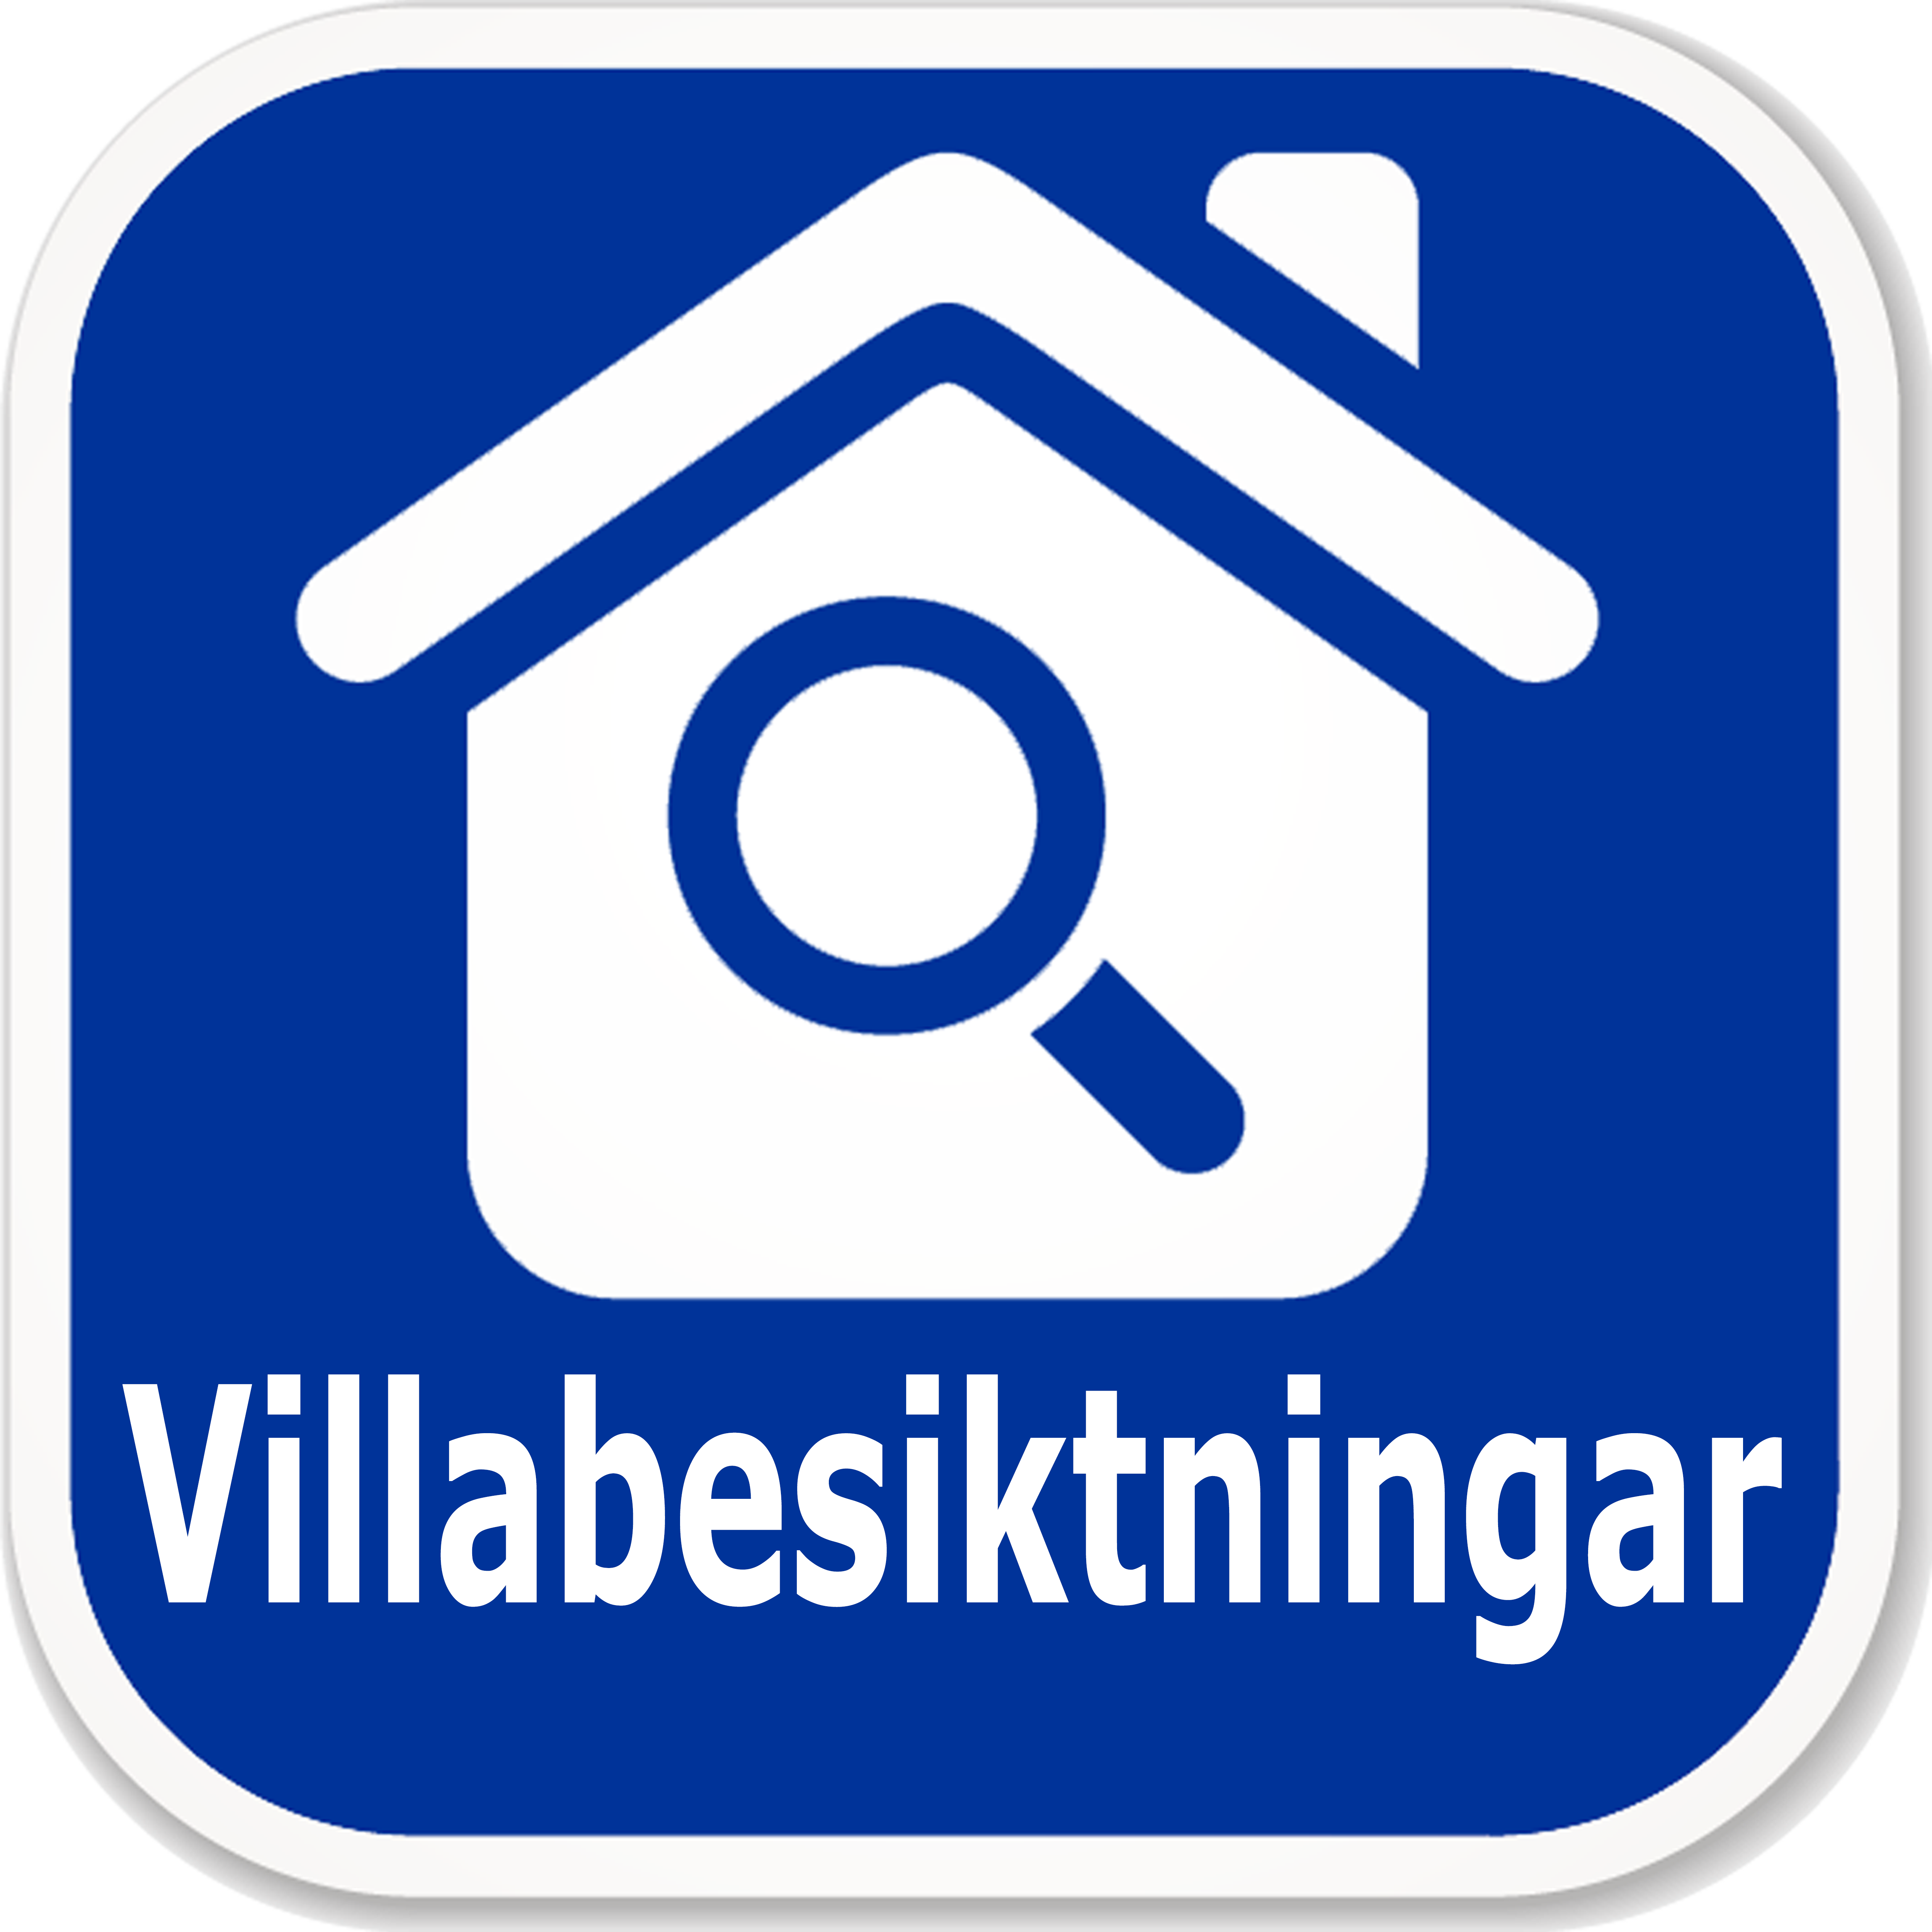 Villabesiktningar i Stockholm AB Logo